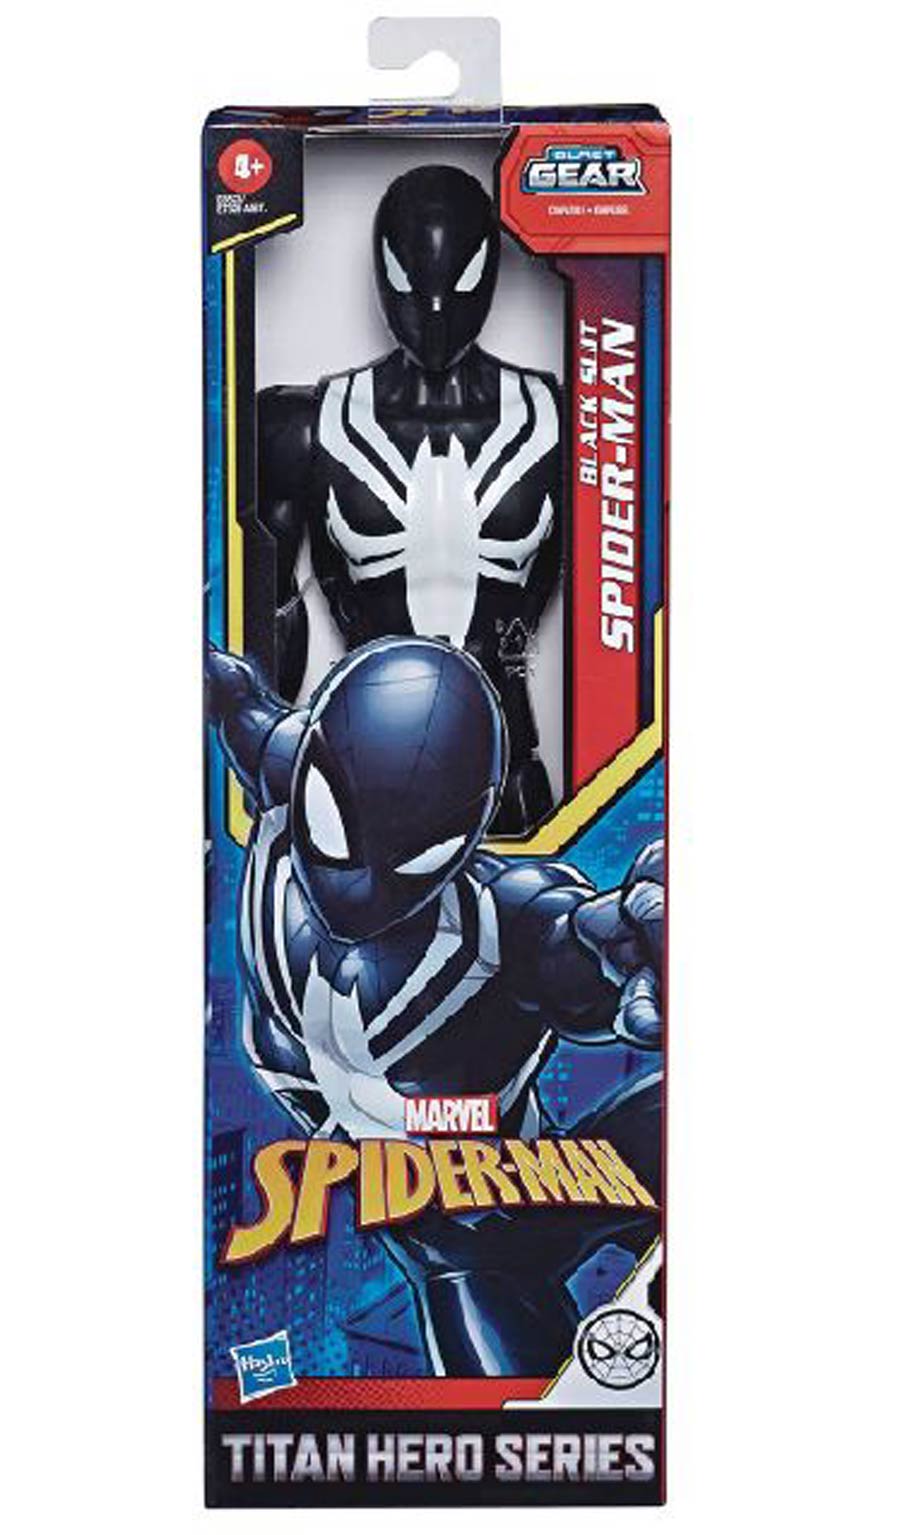 Spider-Man Titan Hero Web Warriors 12-Inch Action Figure 202001 - Black Suit Spider-Man